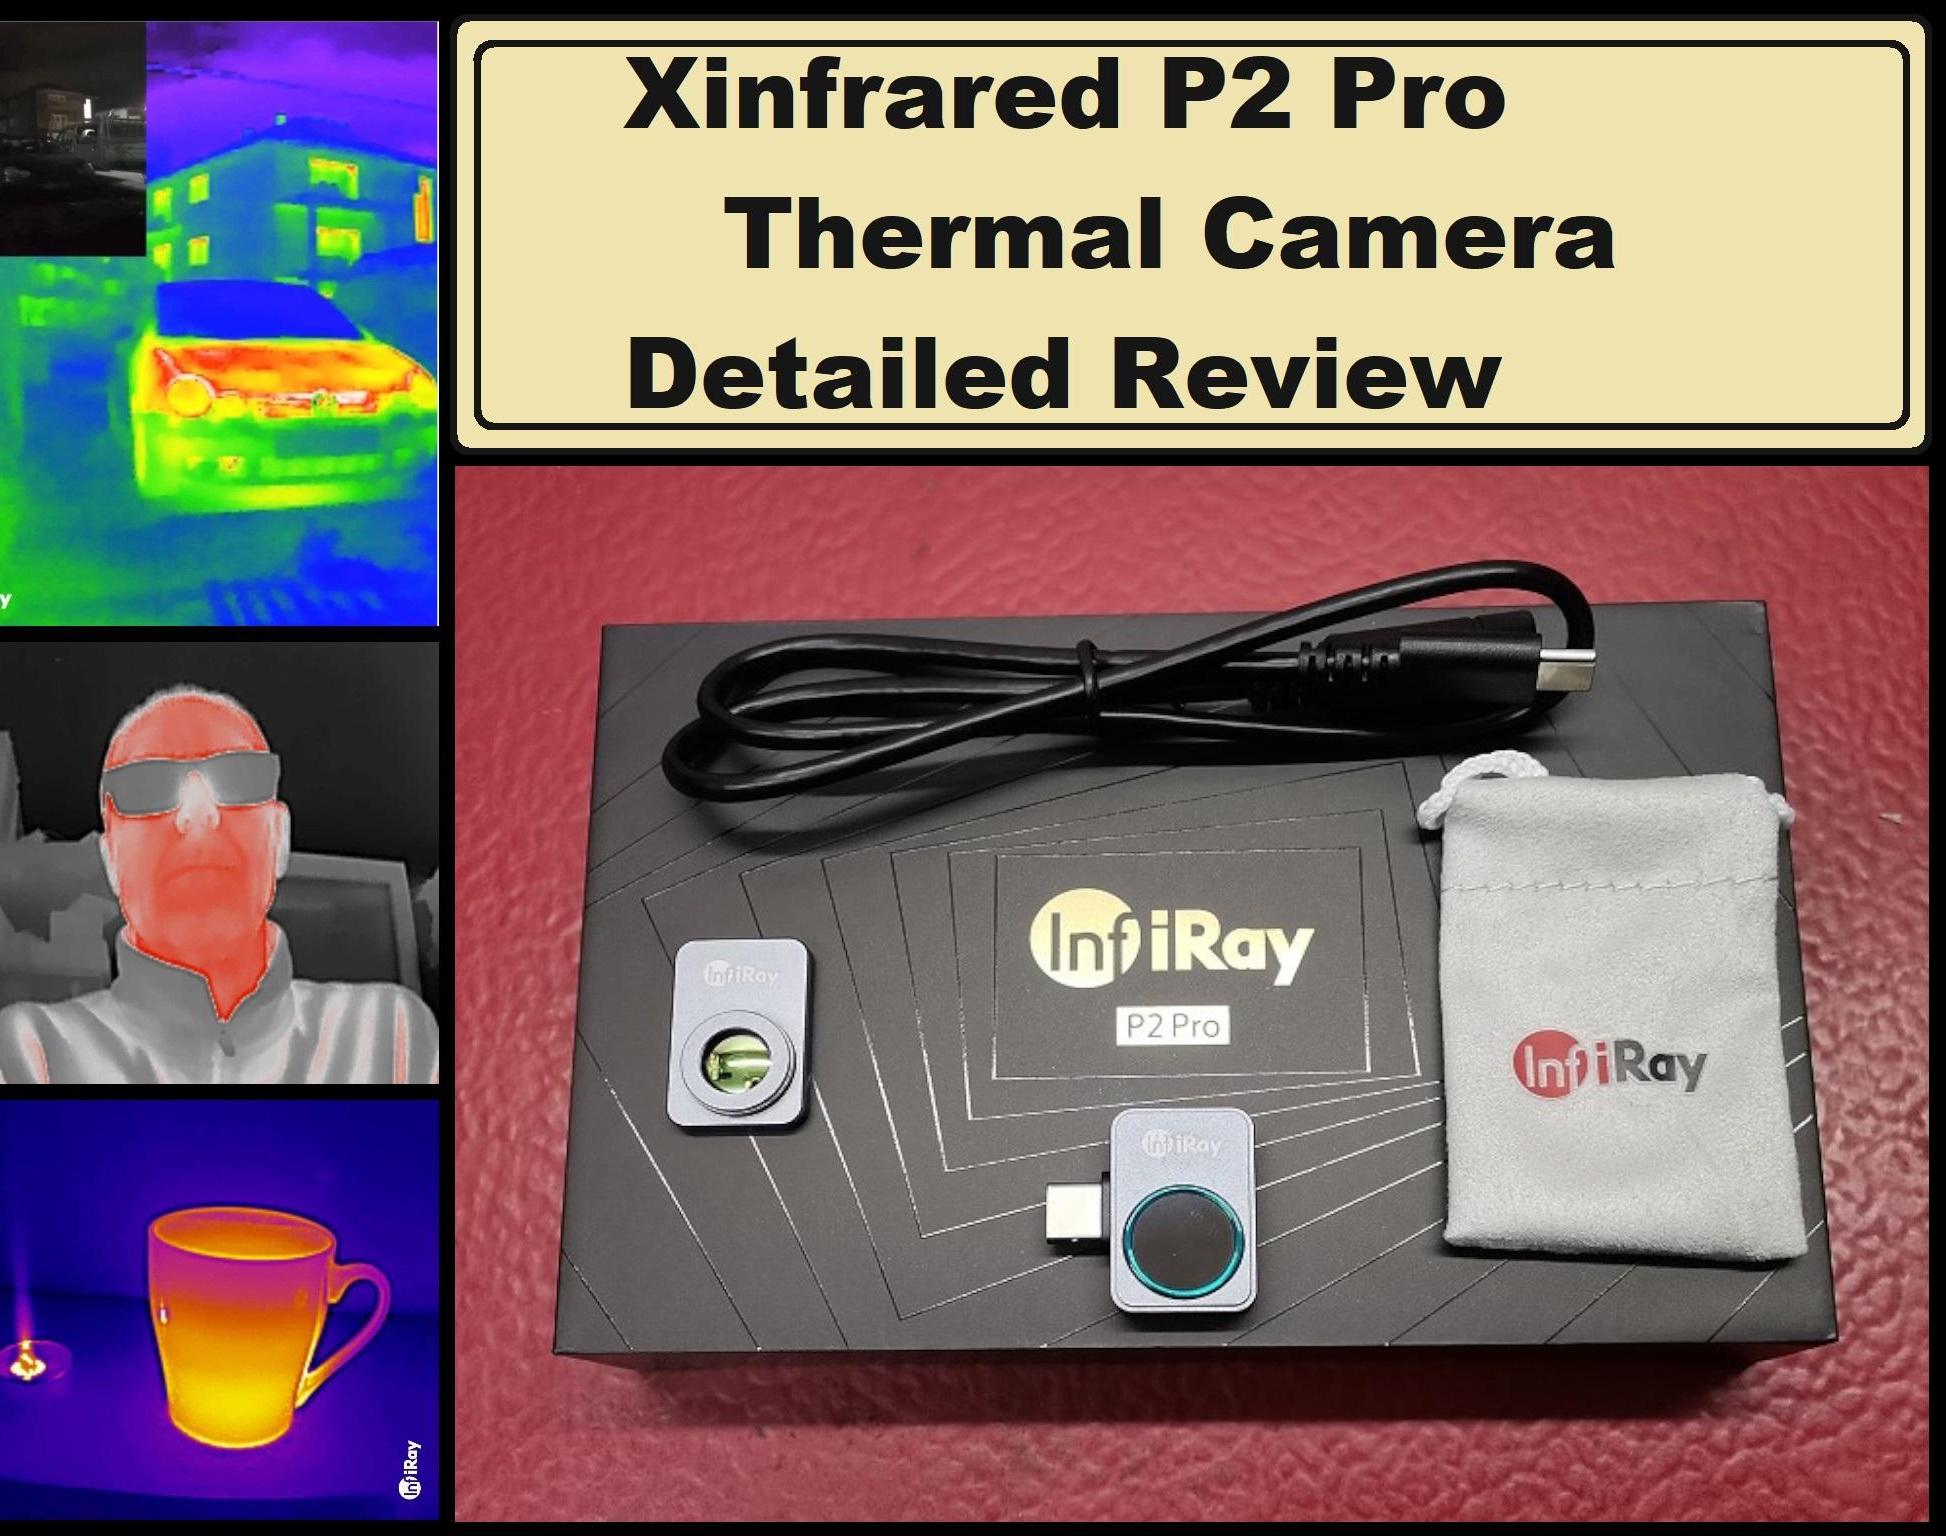 InfiRay Xinfrared P2 Pro Thermal Camera Detailed Review